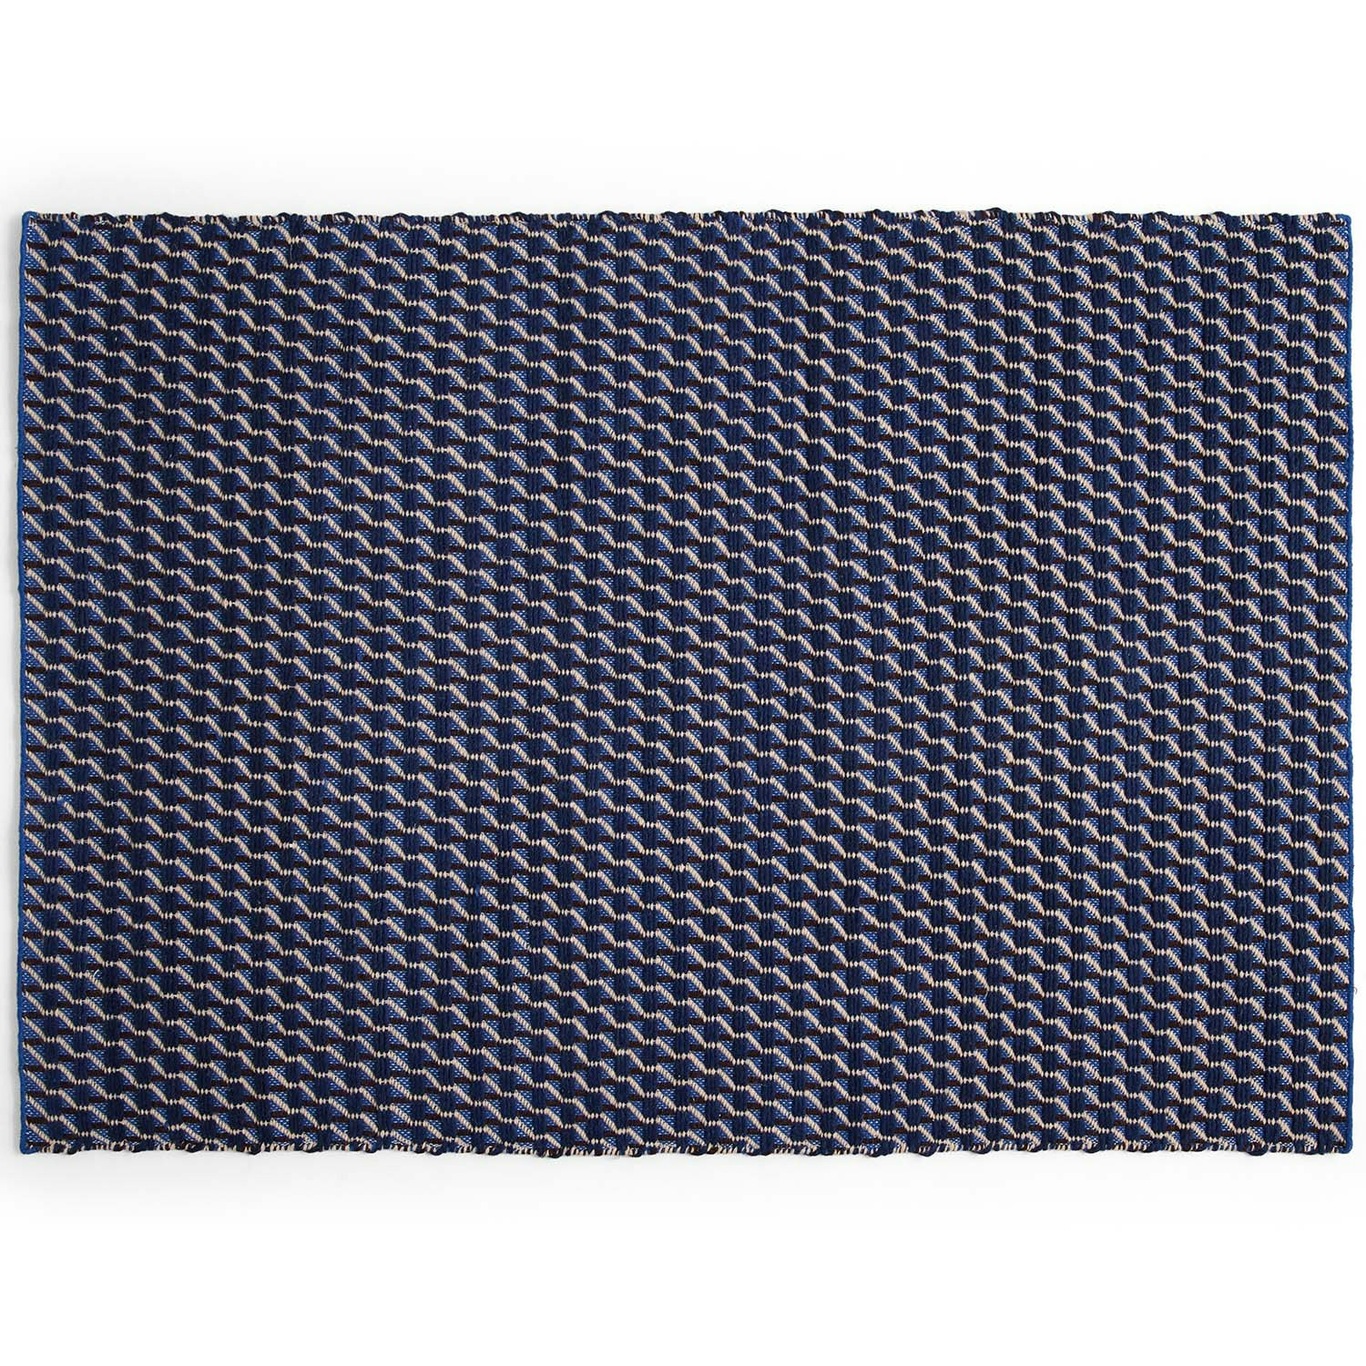 Channel Rug Blue/White, 60x200 cm